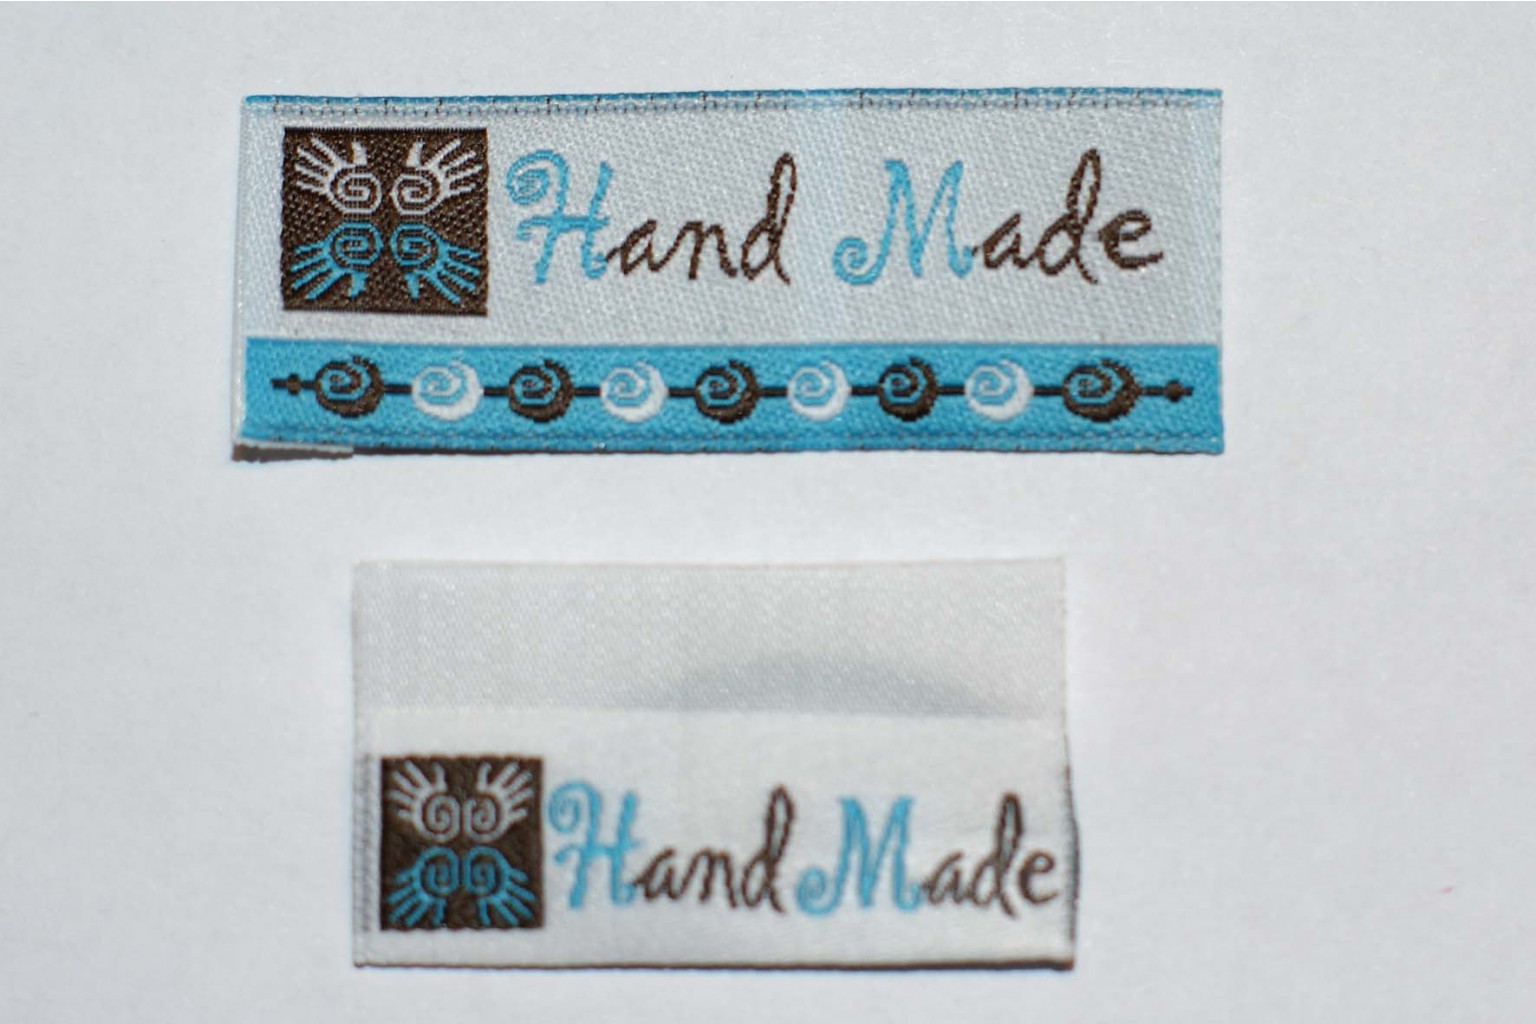 Hand made ()20*50  + Hand made ()12*40 - 13,00/